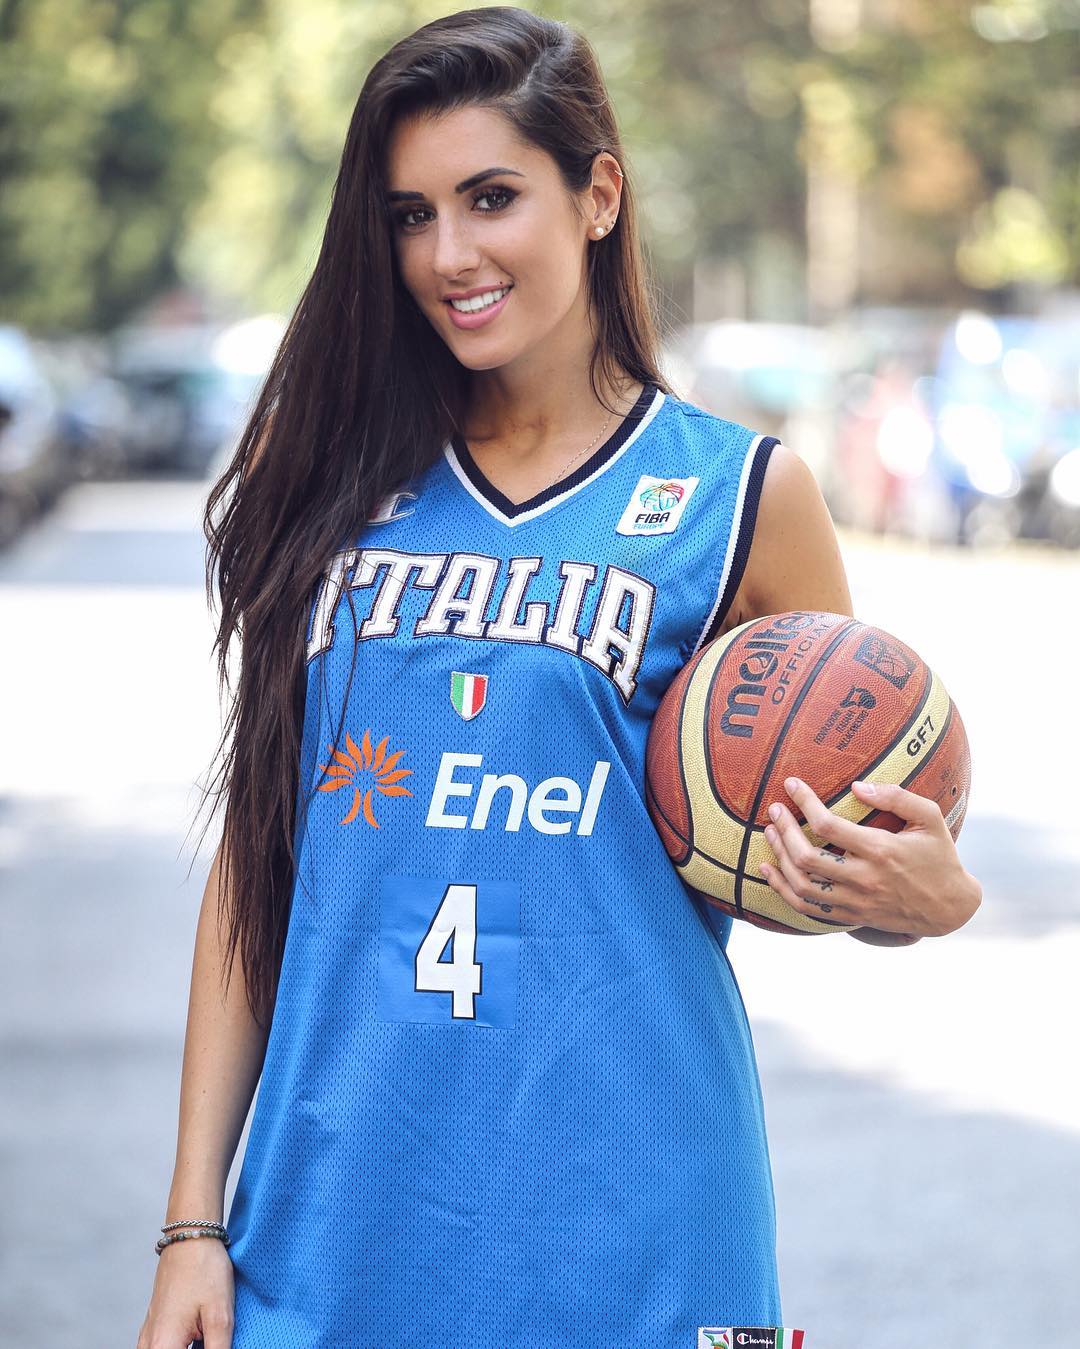 Valentina Vignali Pro Italian Basketball Playe